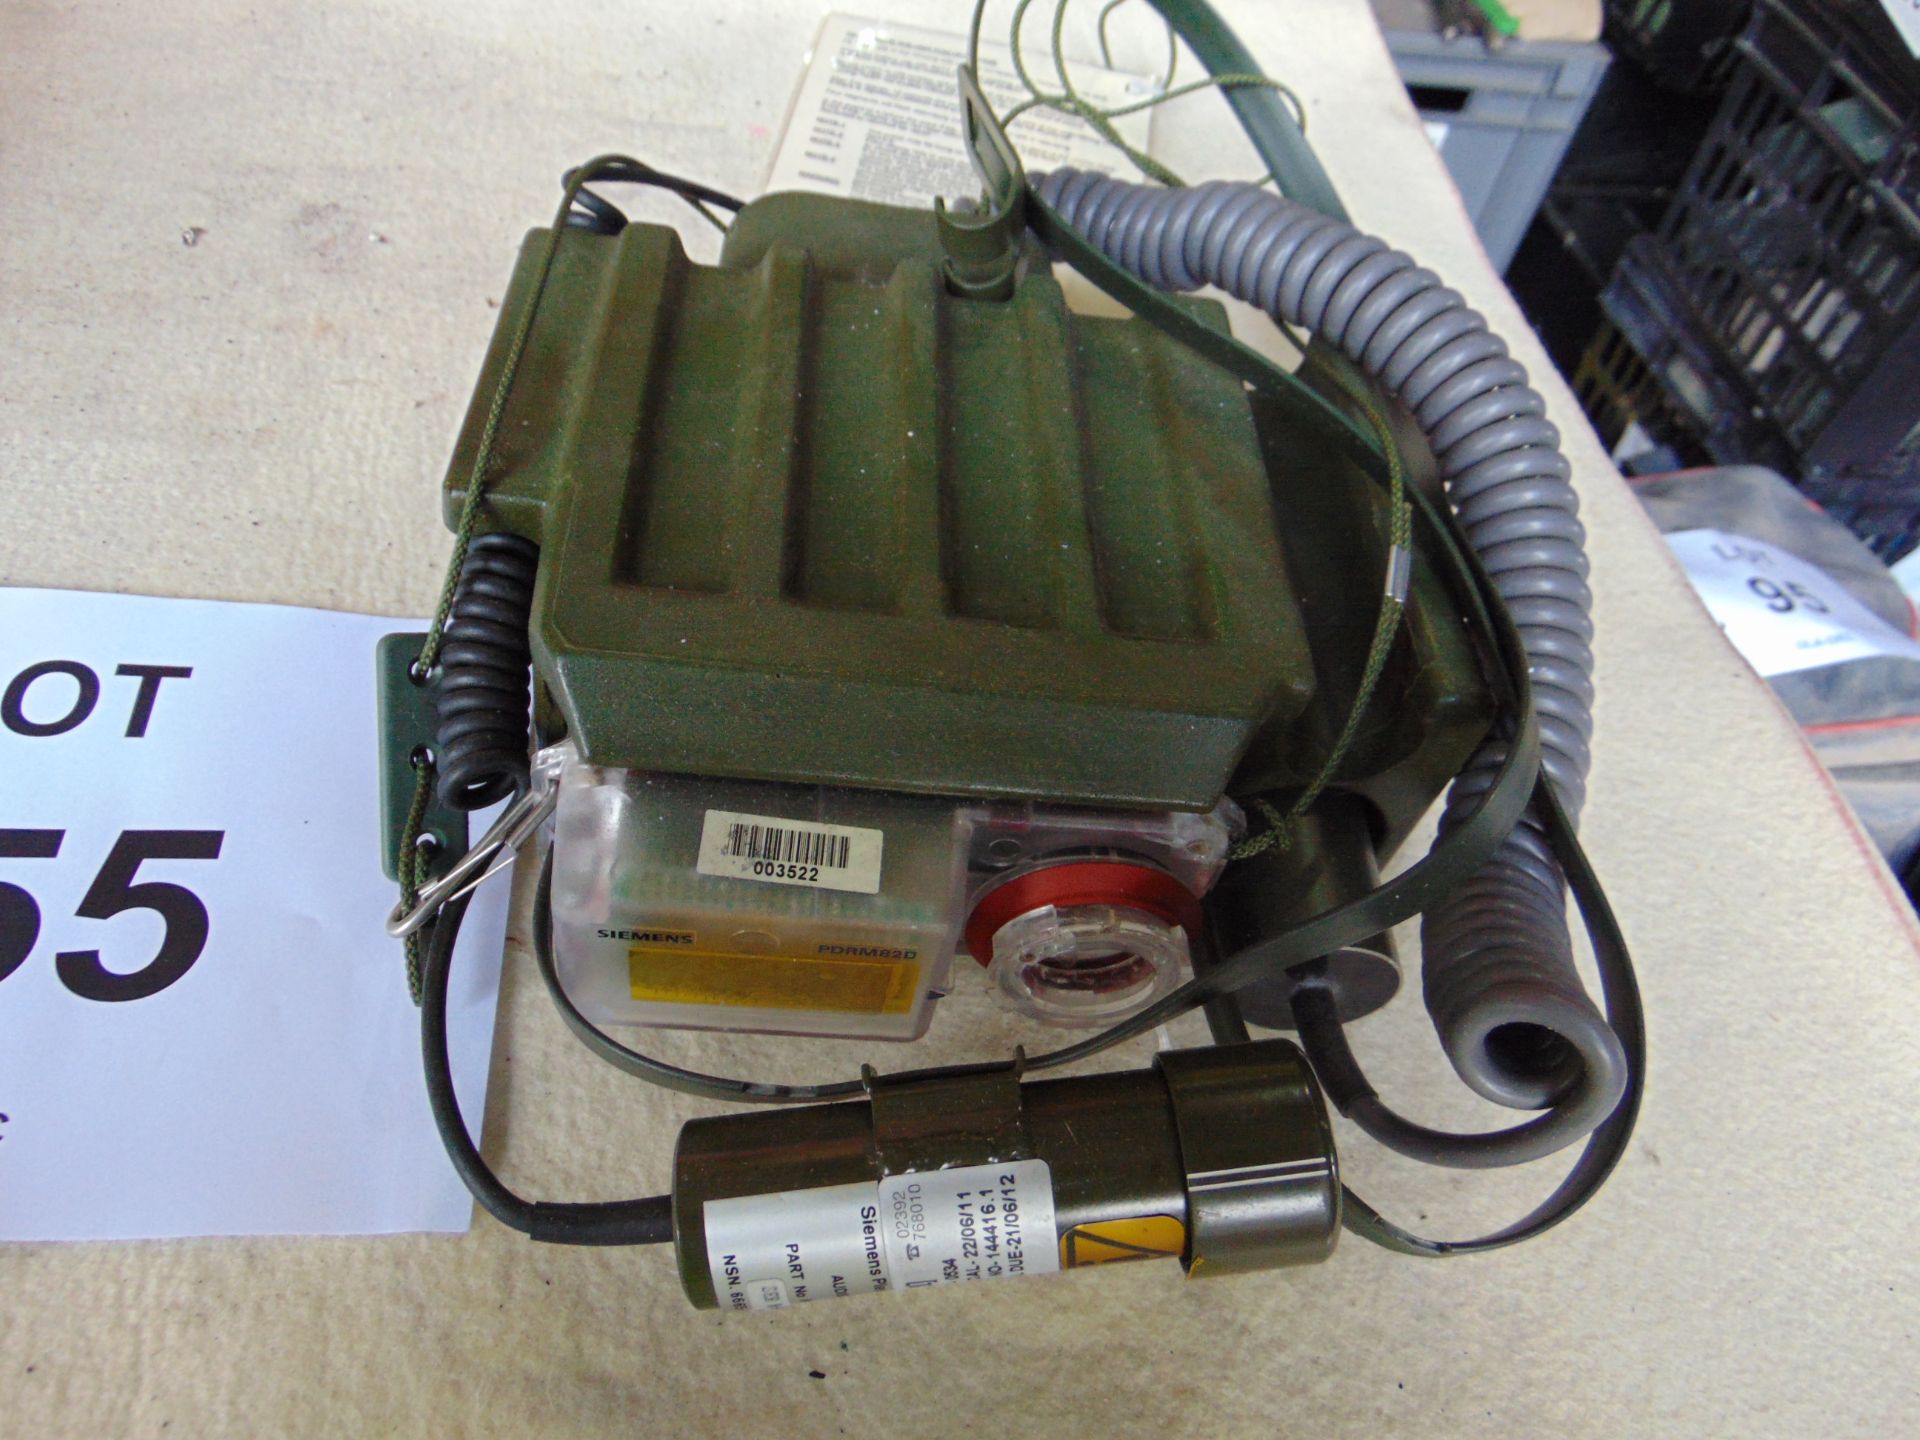 Portable Radiation Detector Dose meter - Image 8 of 8